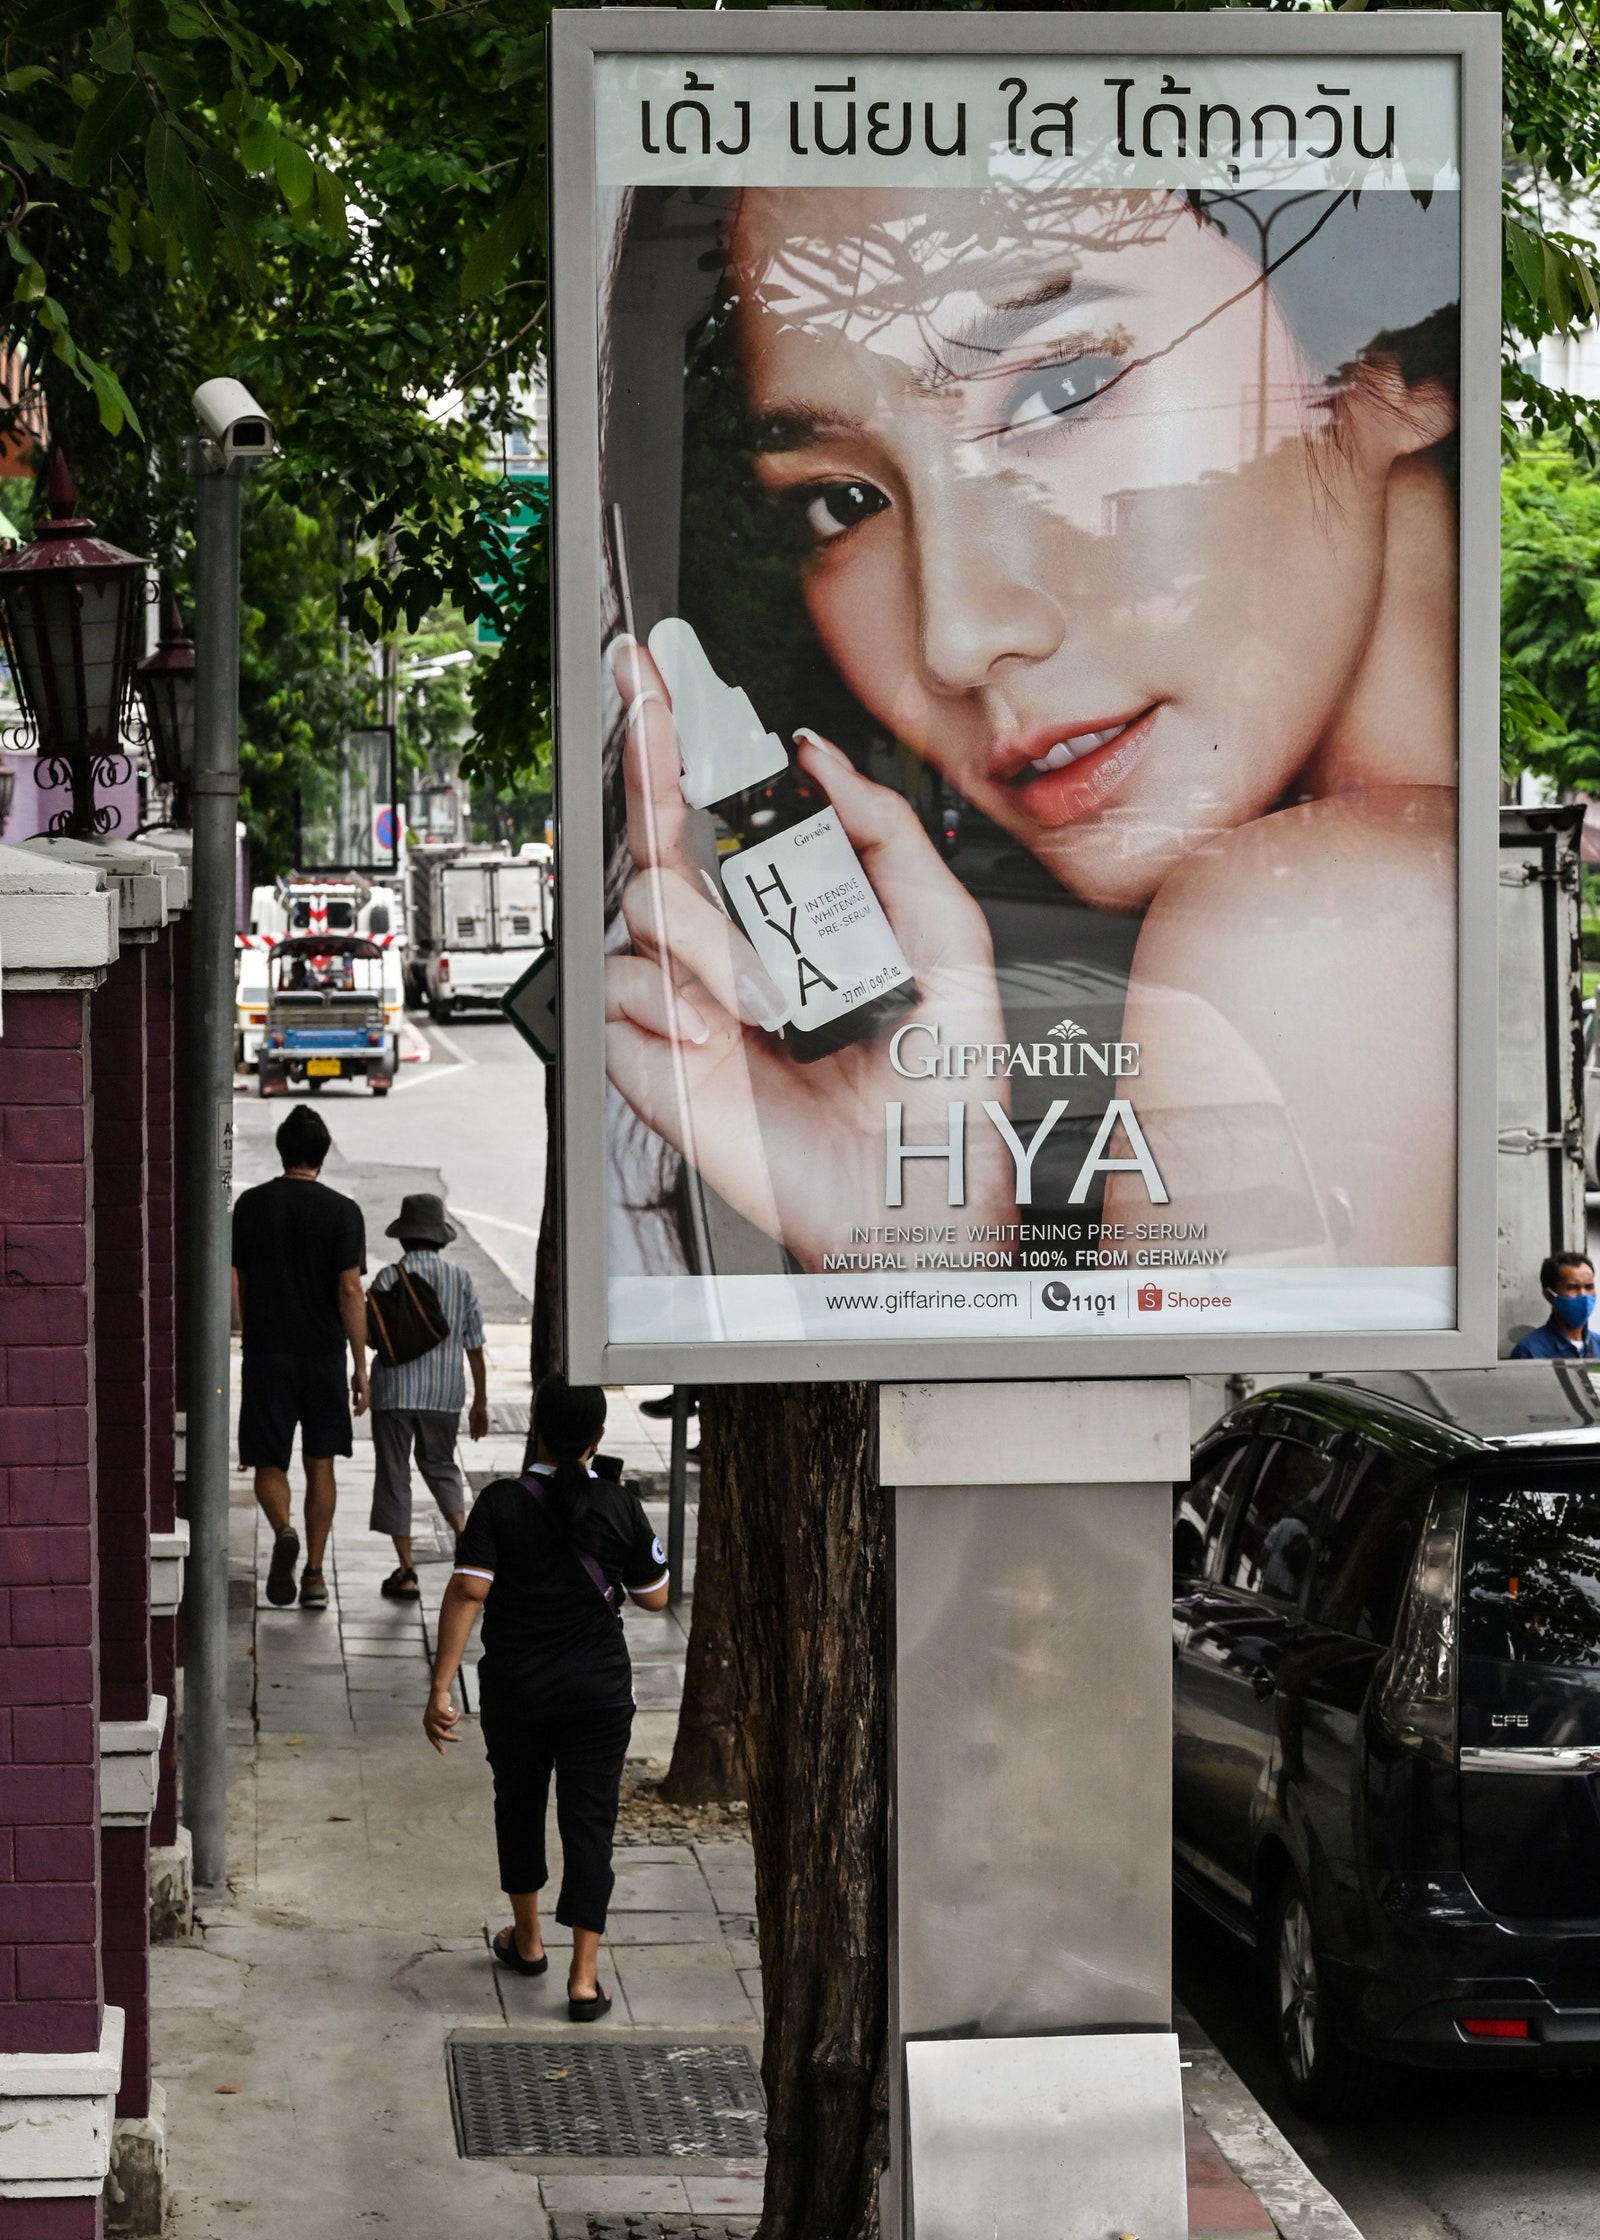 Реклама средств для отбеливания кожи в Таиланде